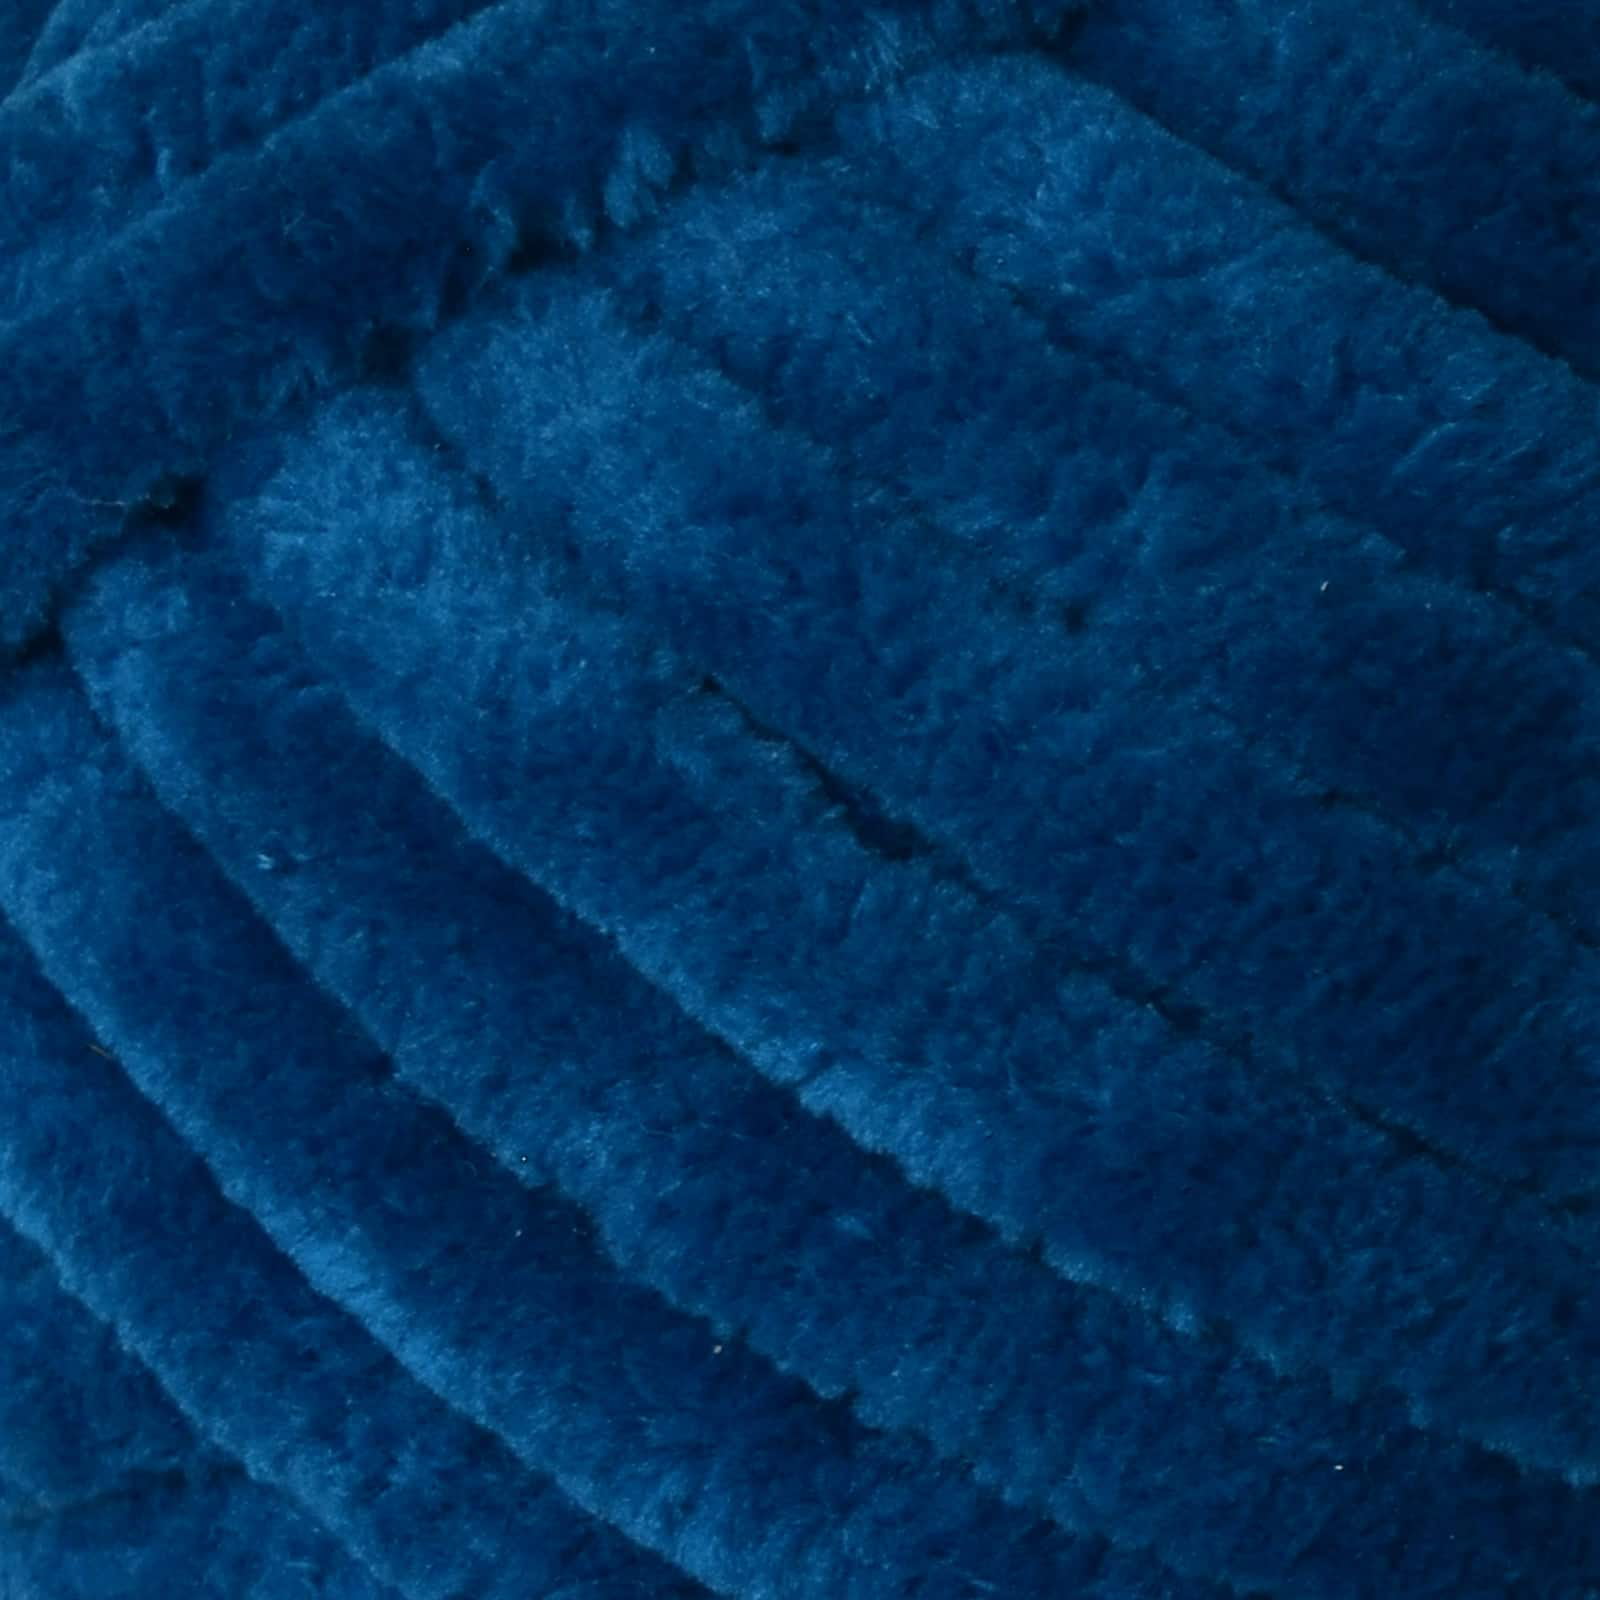 Loops & Threads Chenille Home Slim Solid Yarn - Navy Blue - 8.8 oz